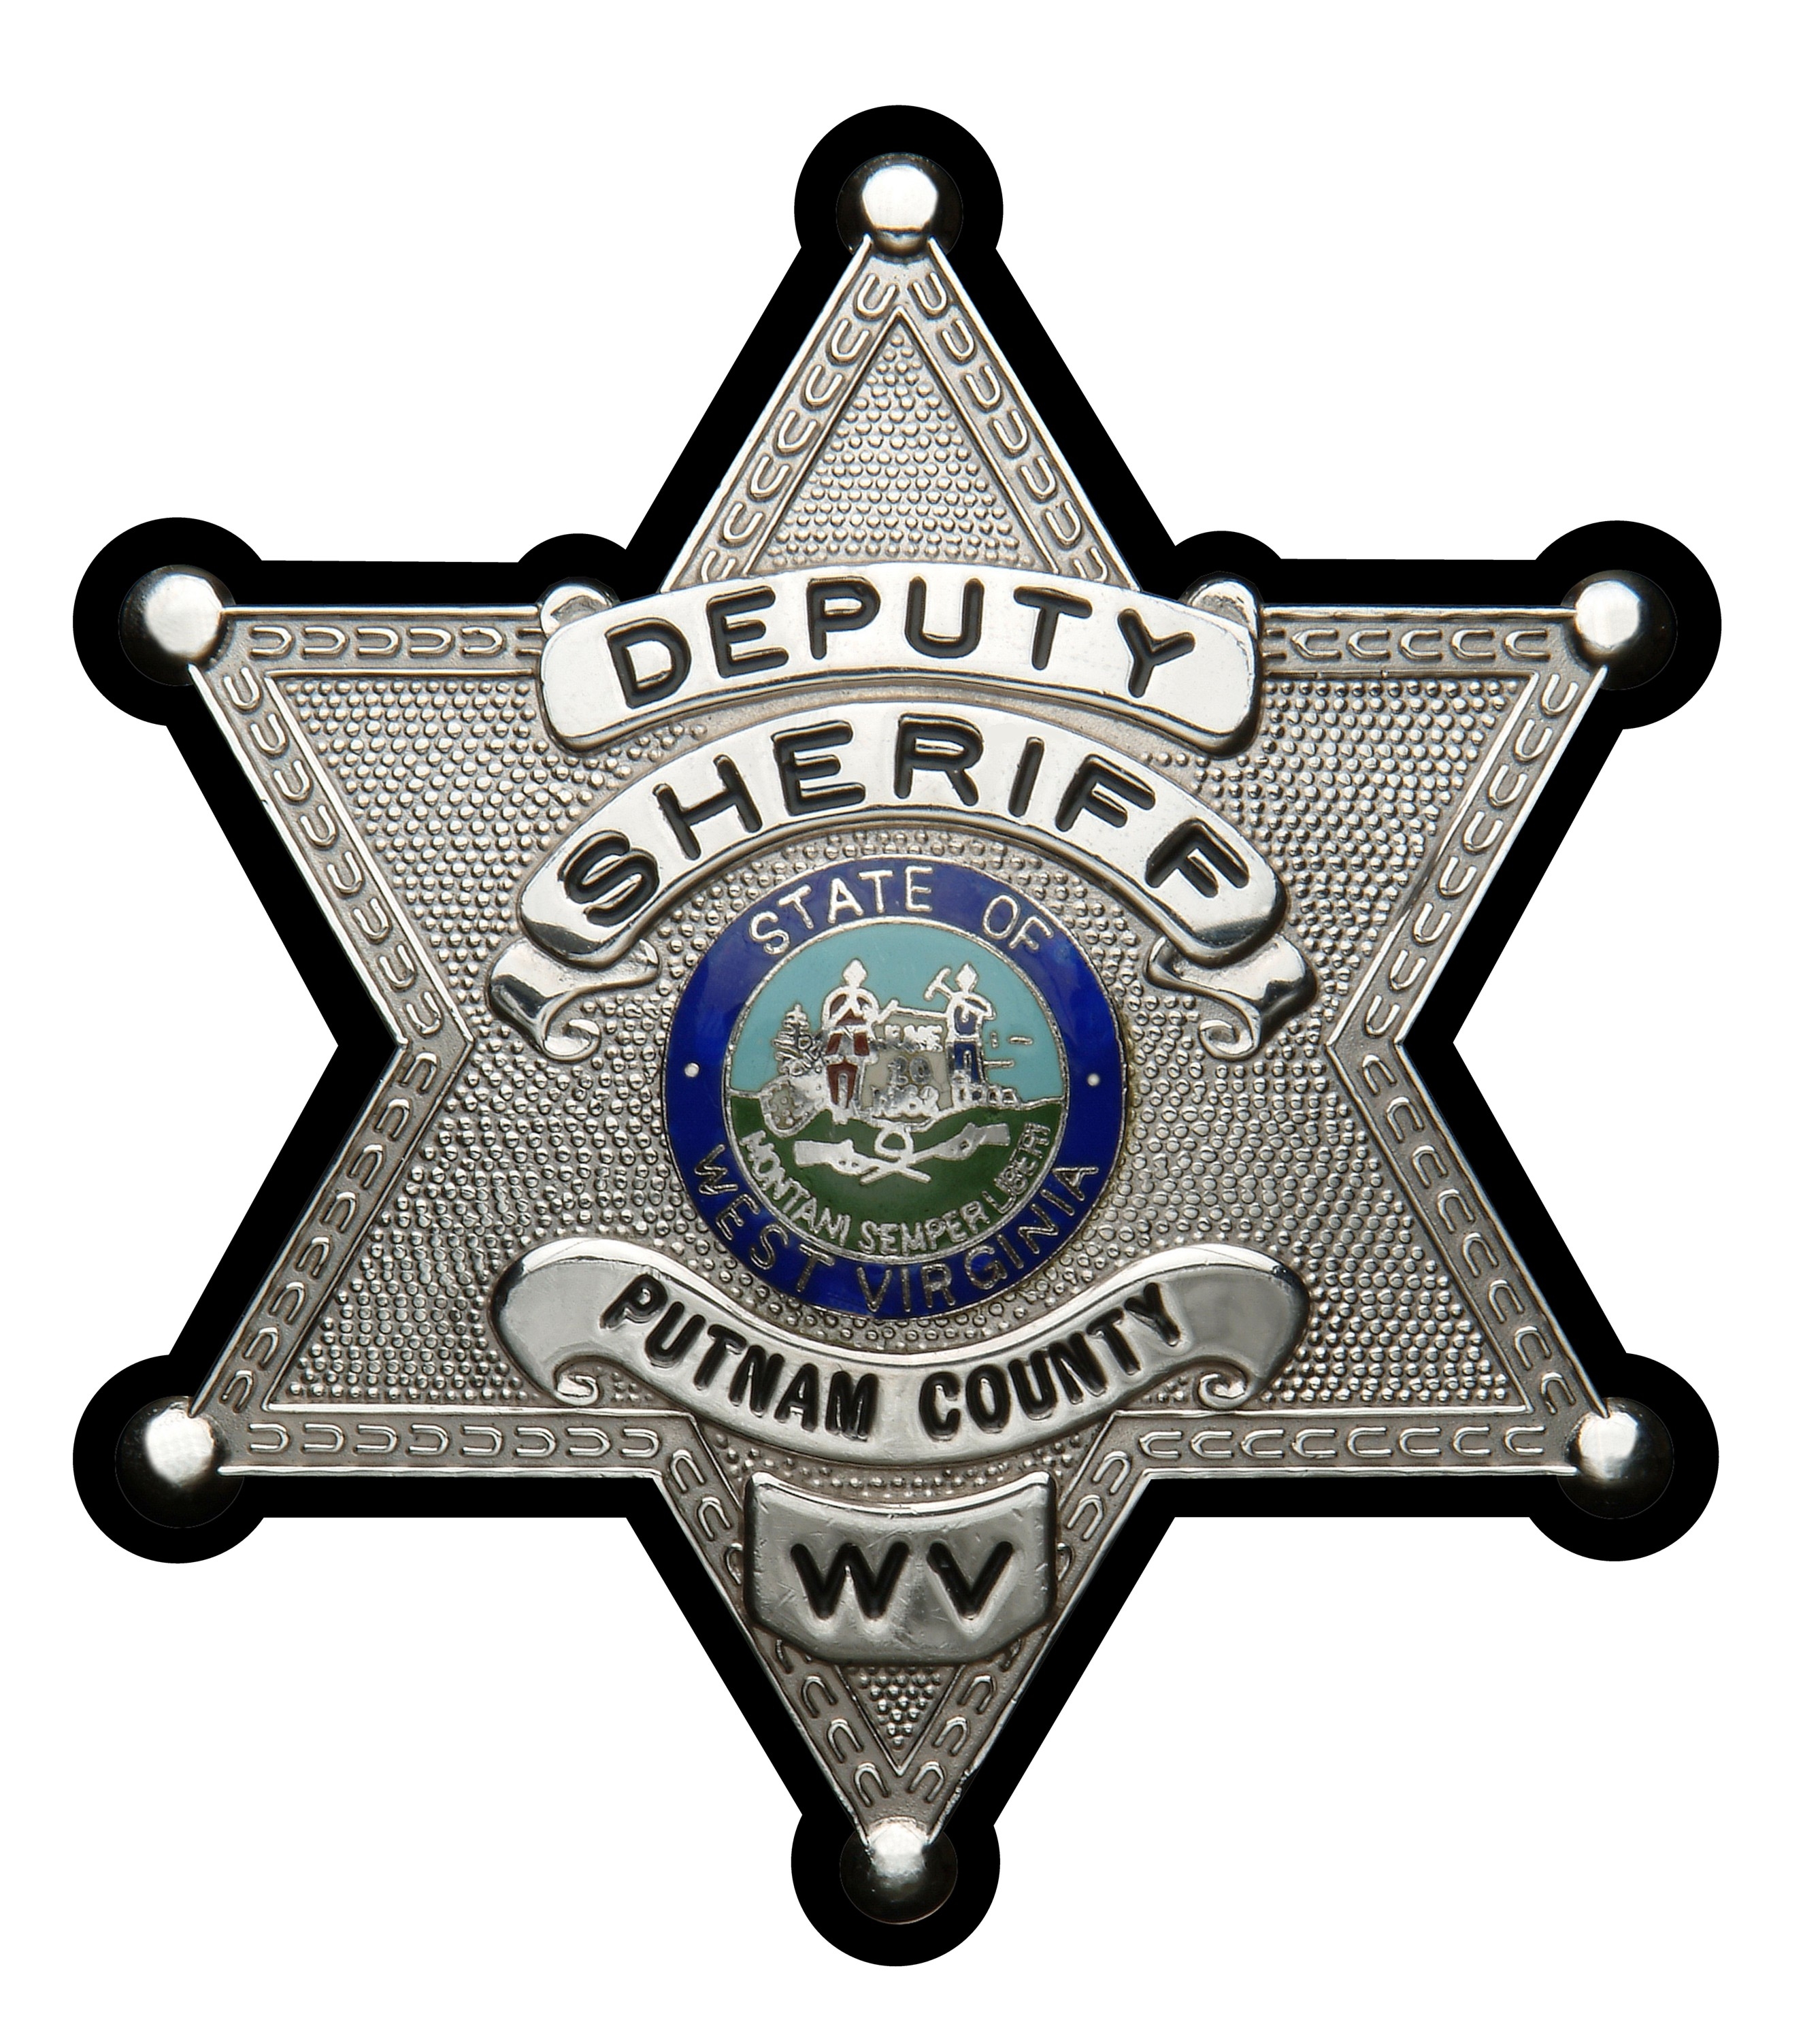 Putnam County Sheriff's Department, WV Police Jobs